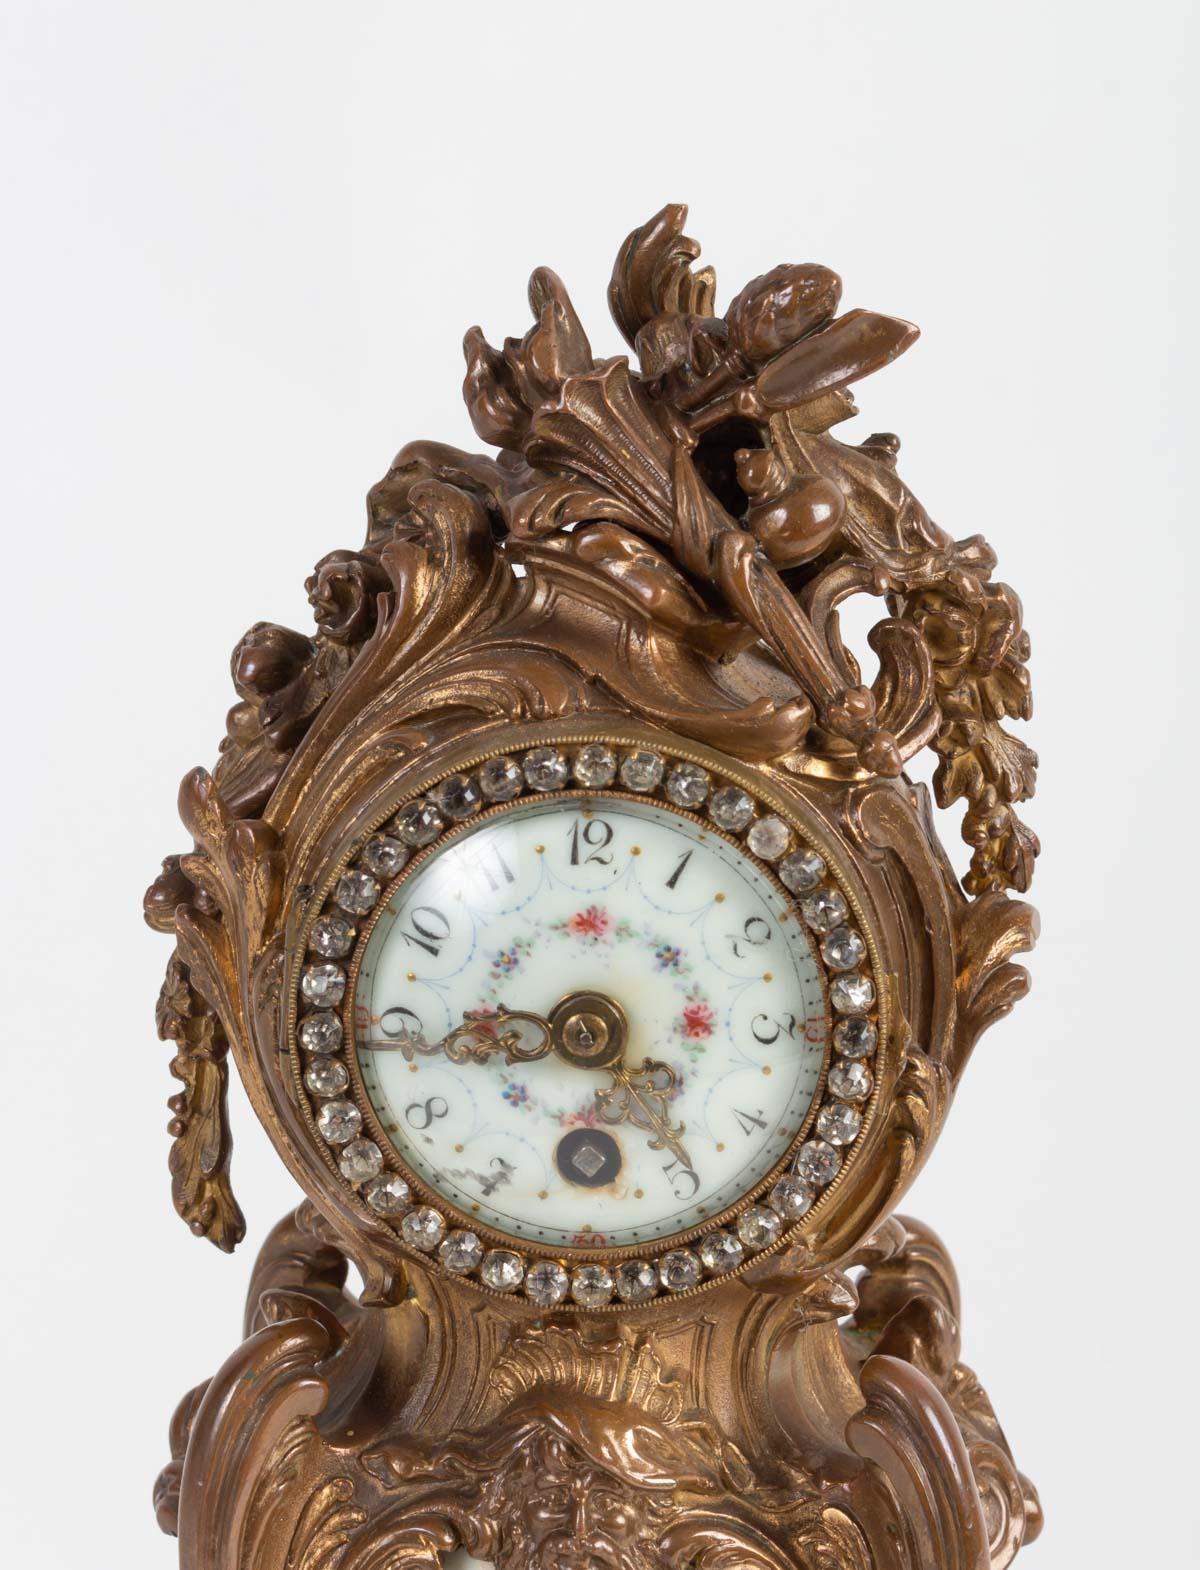 Desk clock in regulation and porcelain, enameled dial, strass, 19th century.

Measures: H 30 cm, L 12 cm, D 10 cm.